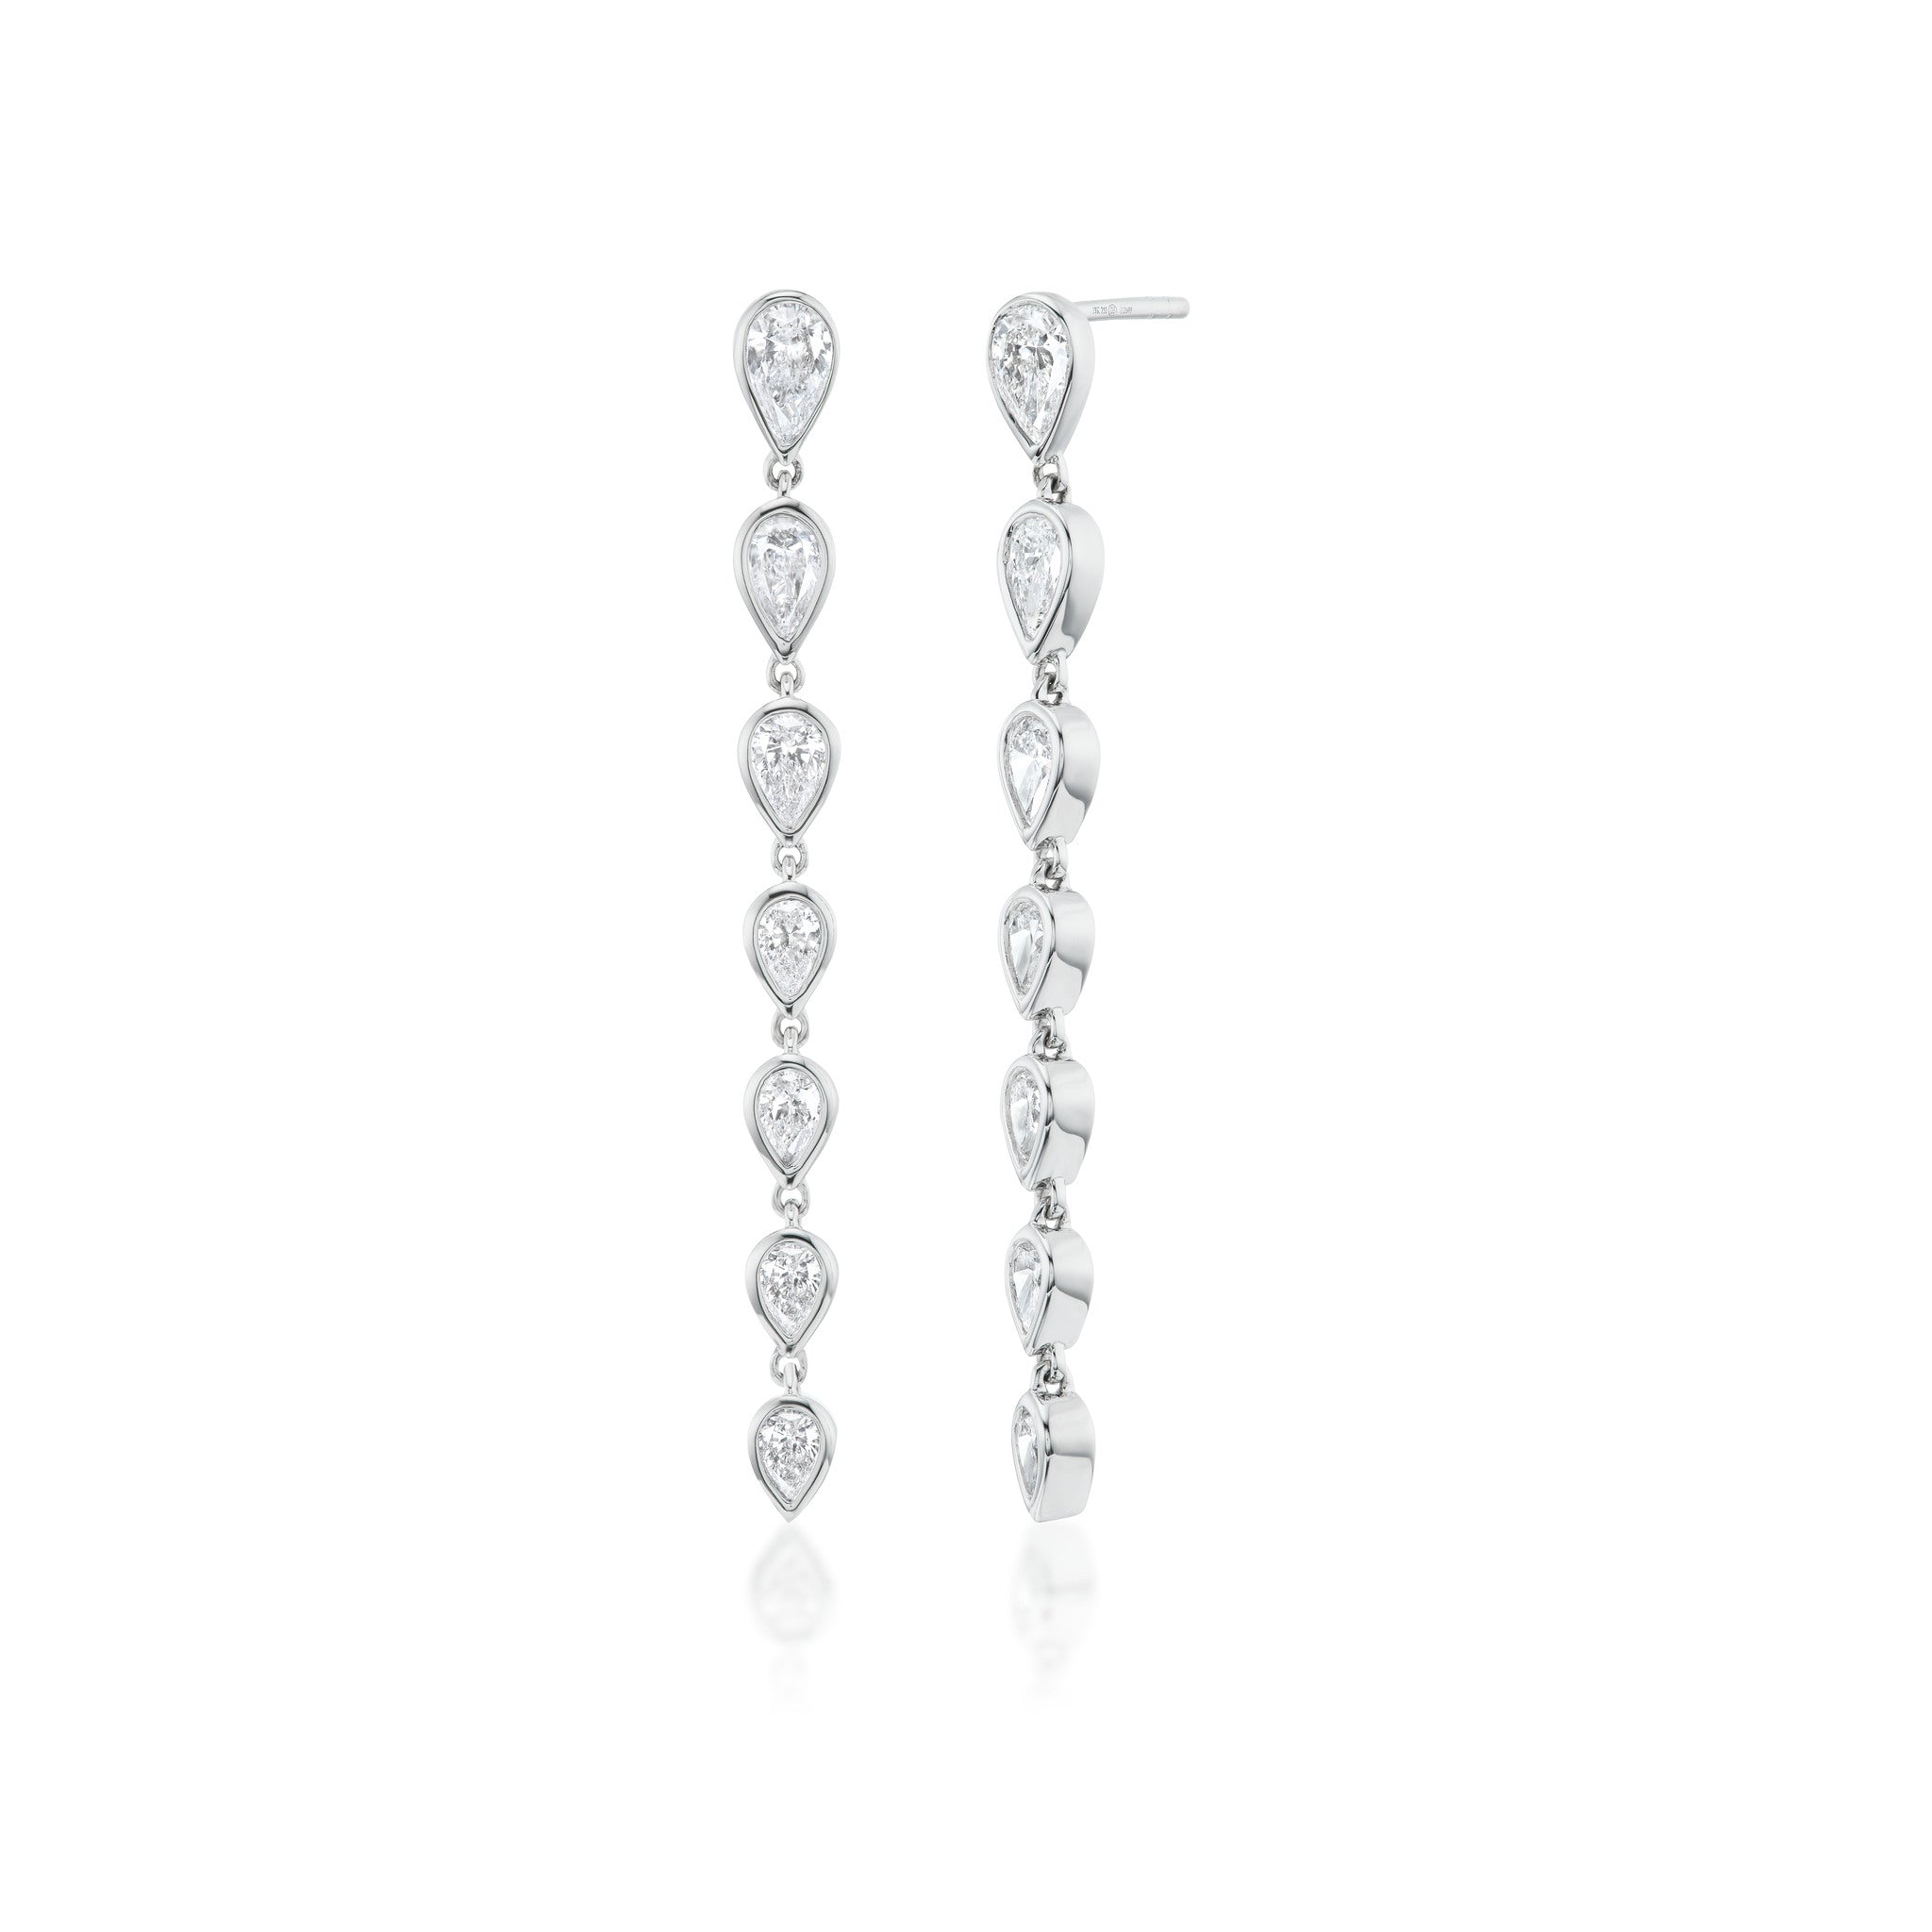 The Ava Pearshape Diamond Drop Earrings